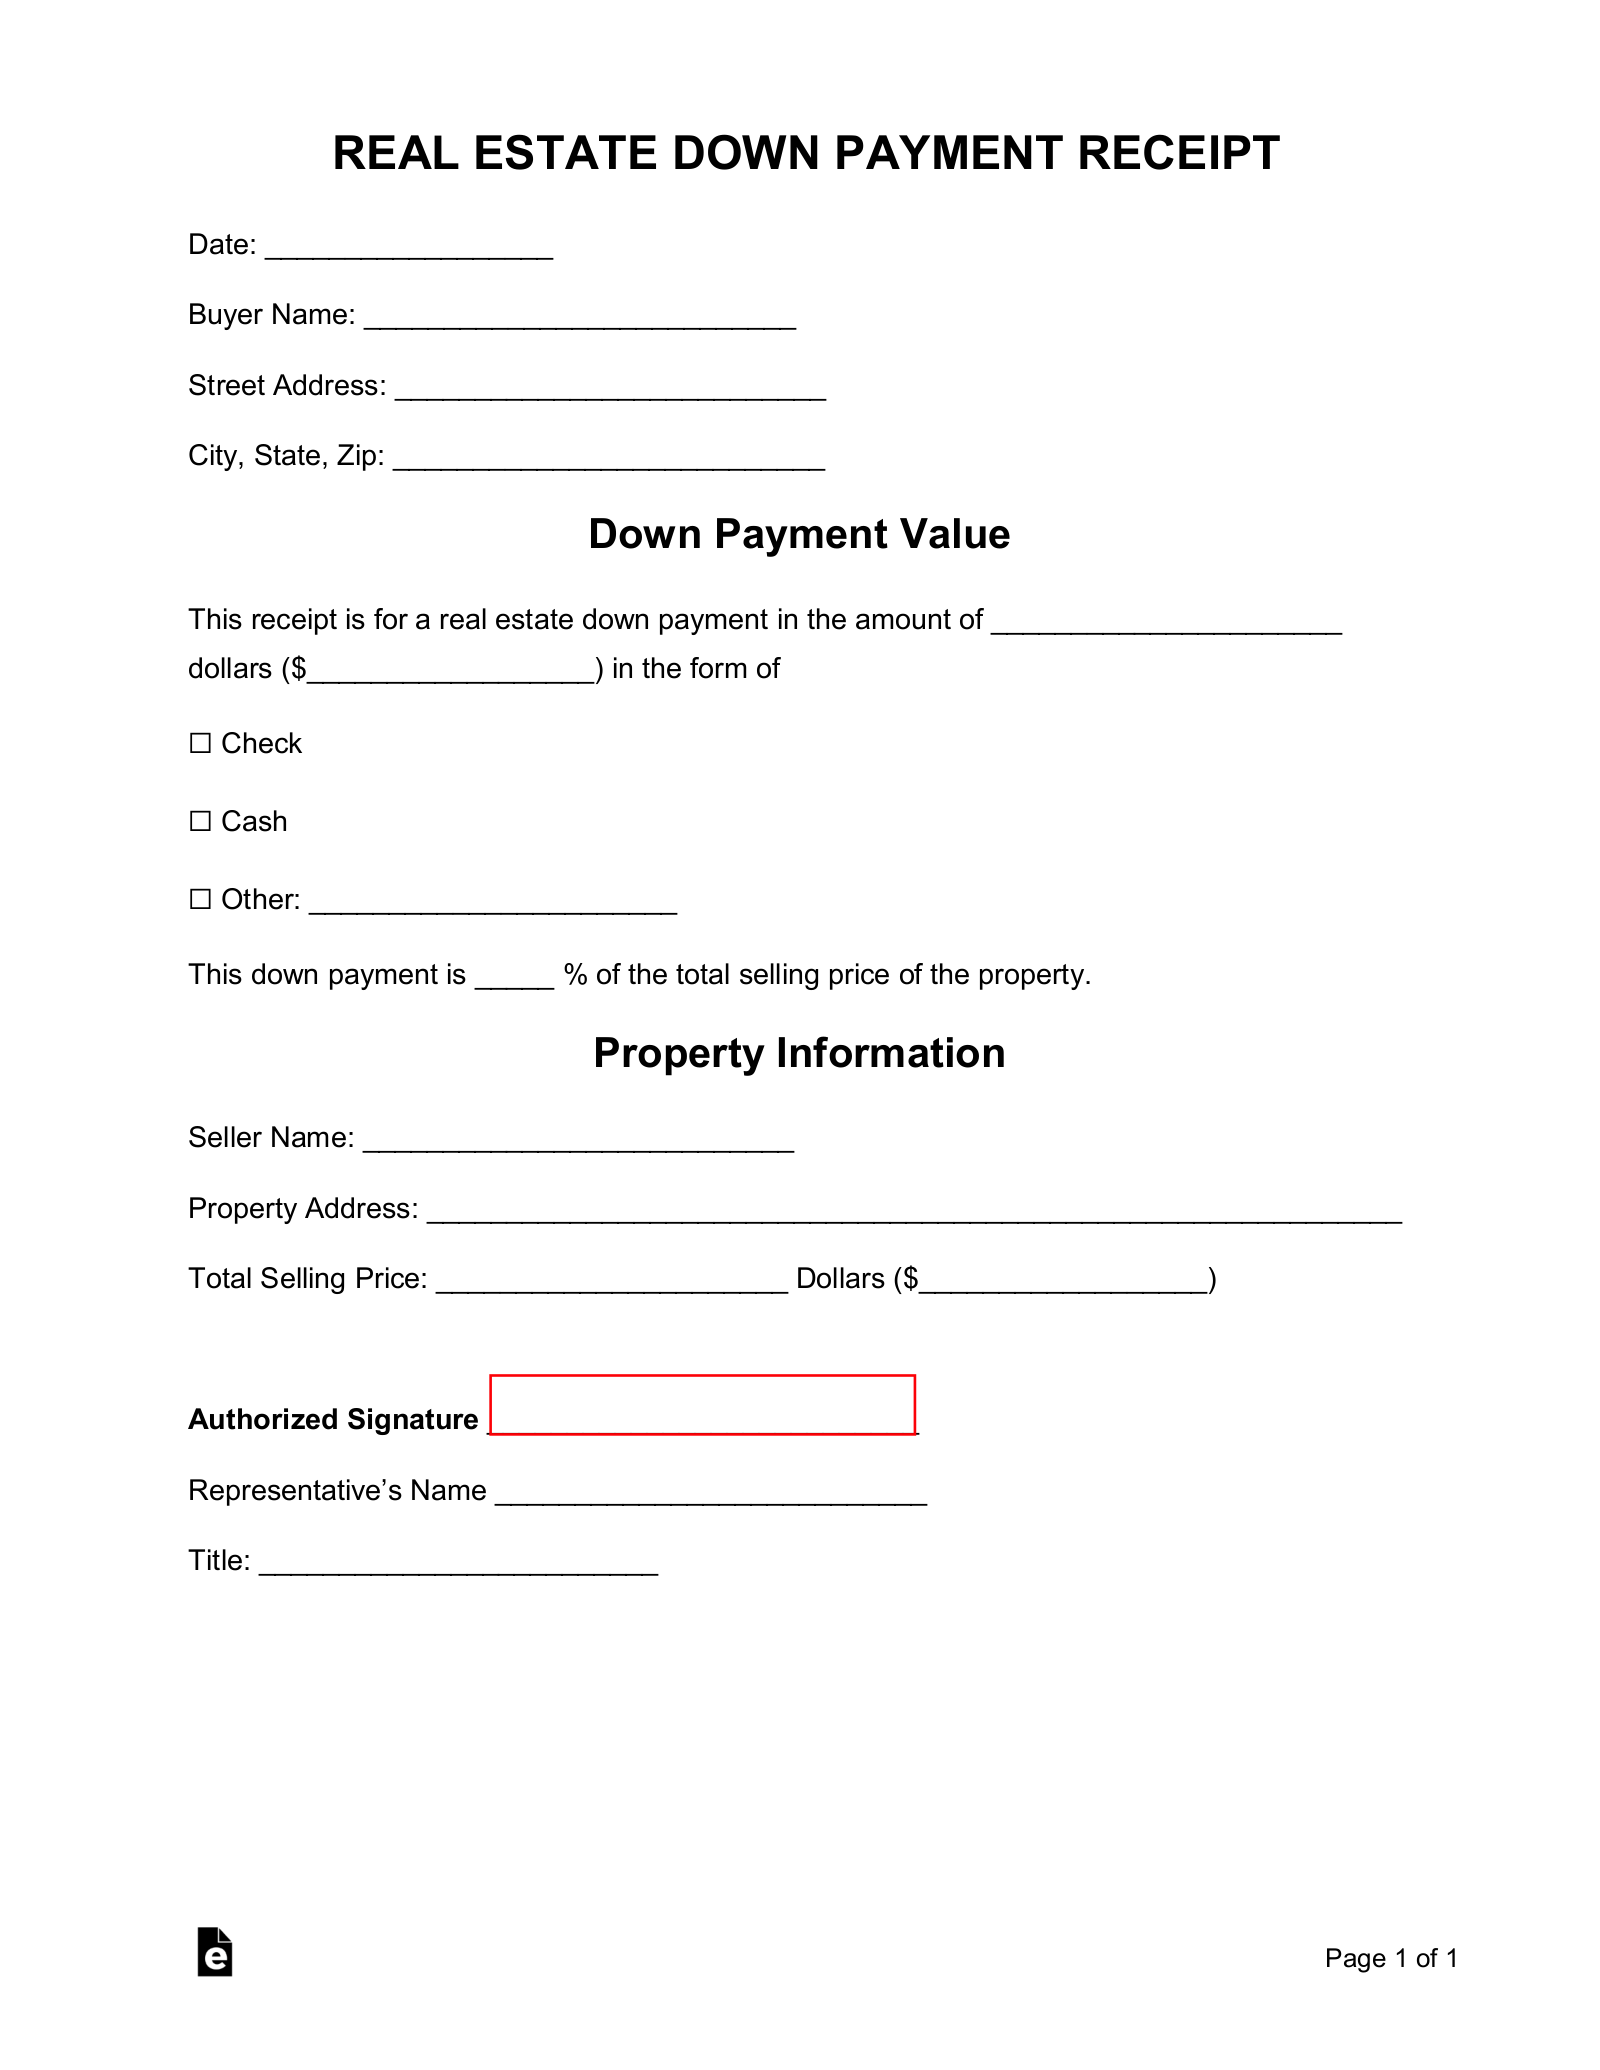 renters-receipt-form-check-more-at-https-nationalgriefawarenessday-22218-renters-receipt